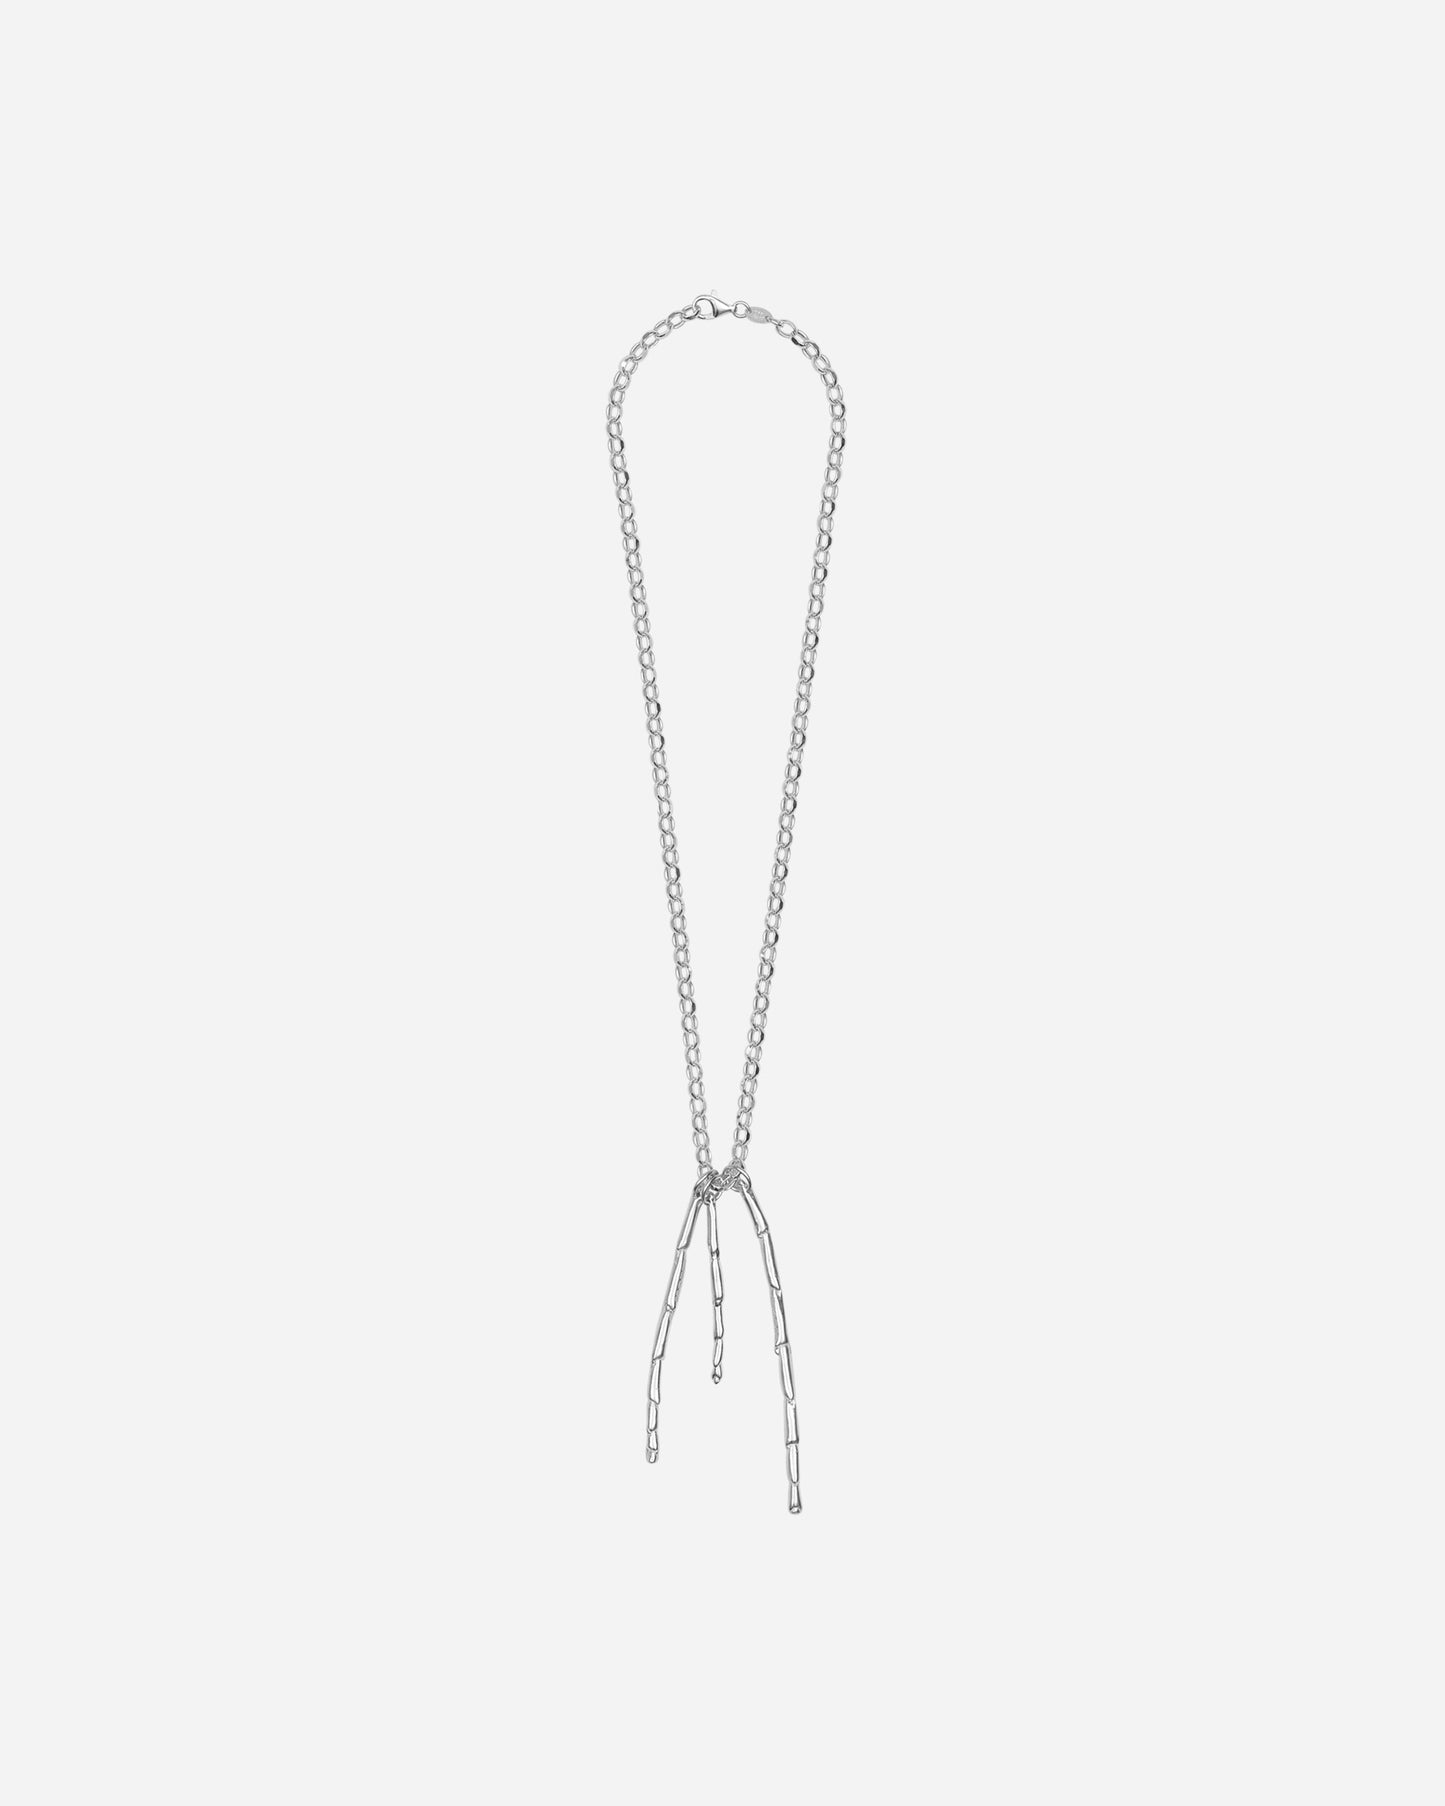 Octi Samphire Sticks Necklace Silver Jewellery Necklaces SPN 001